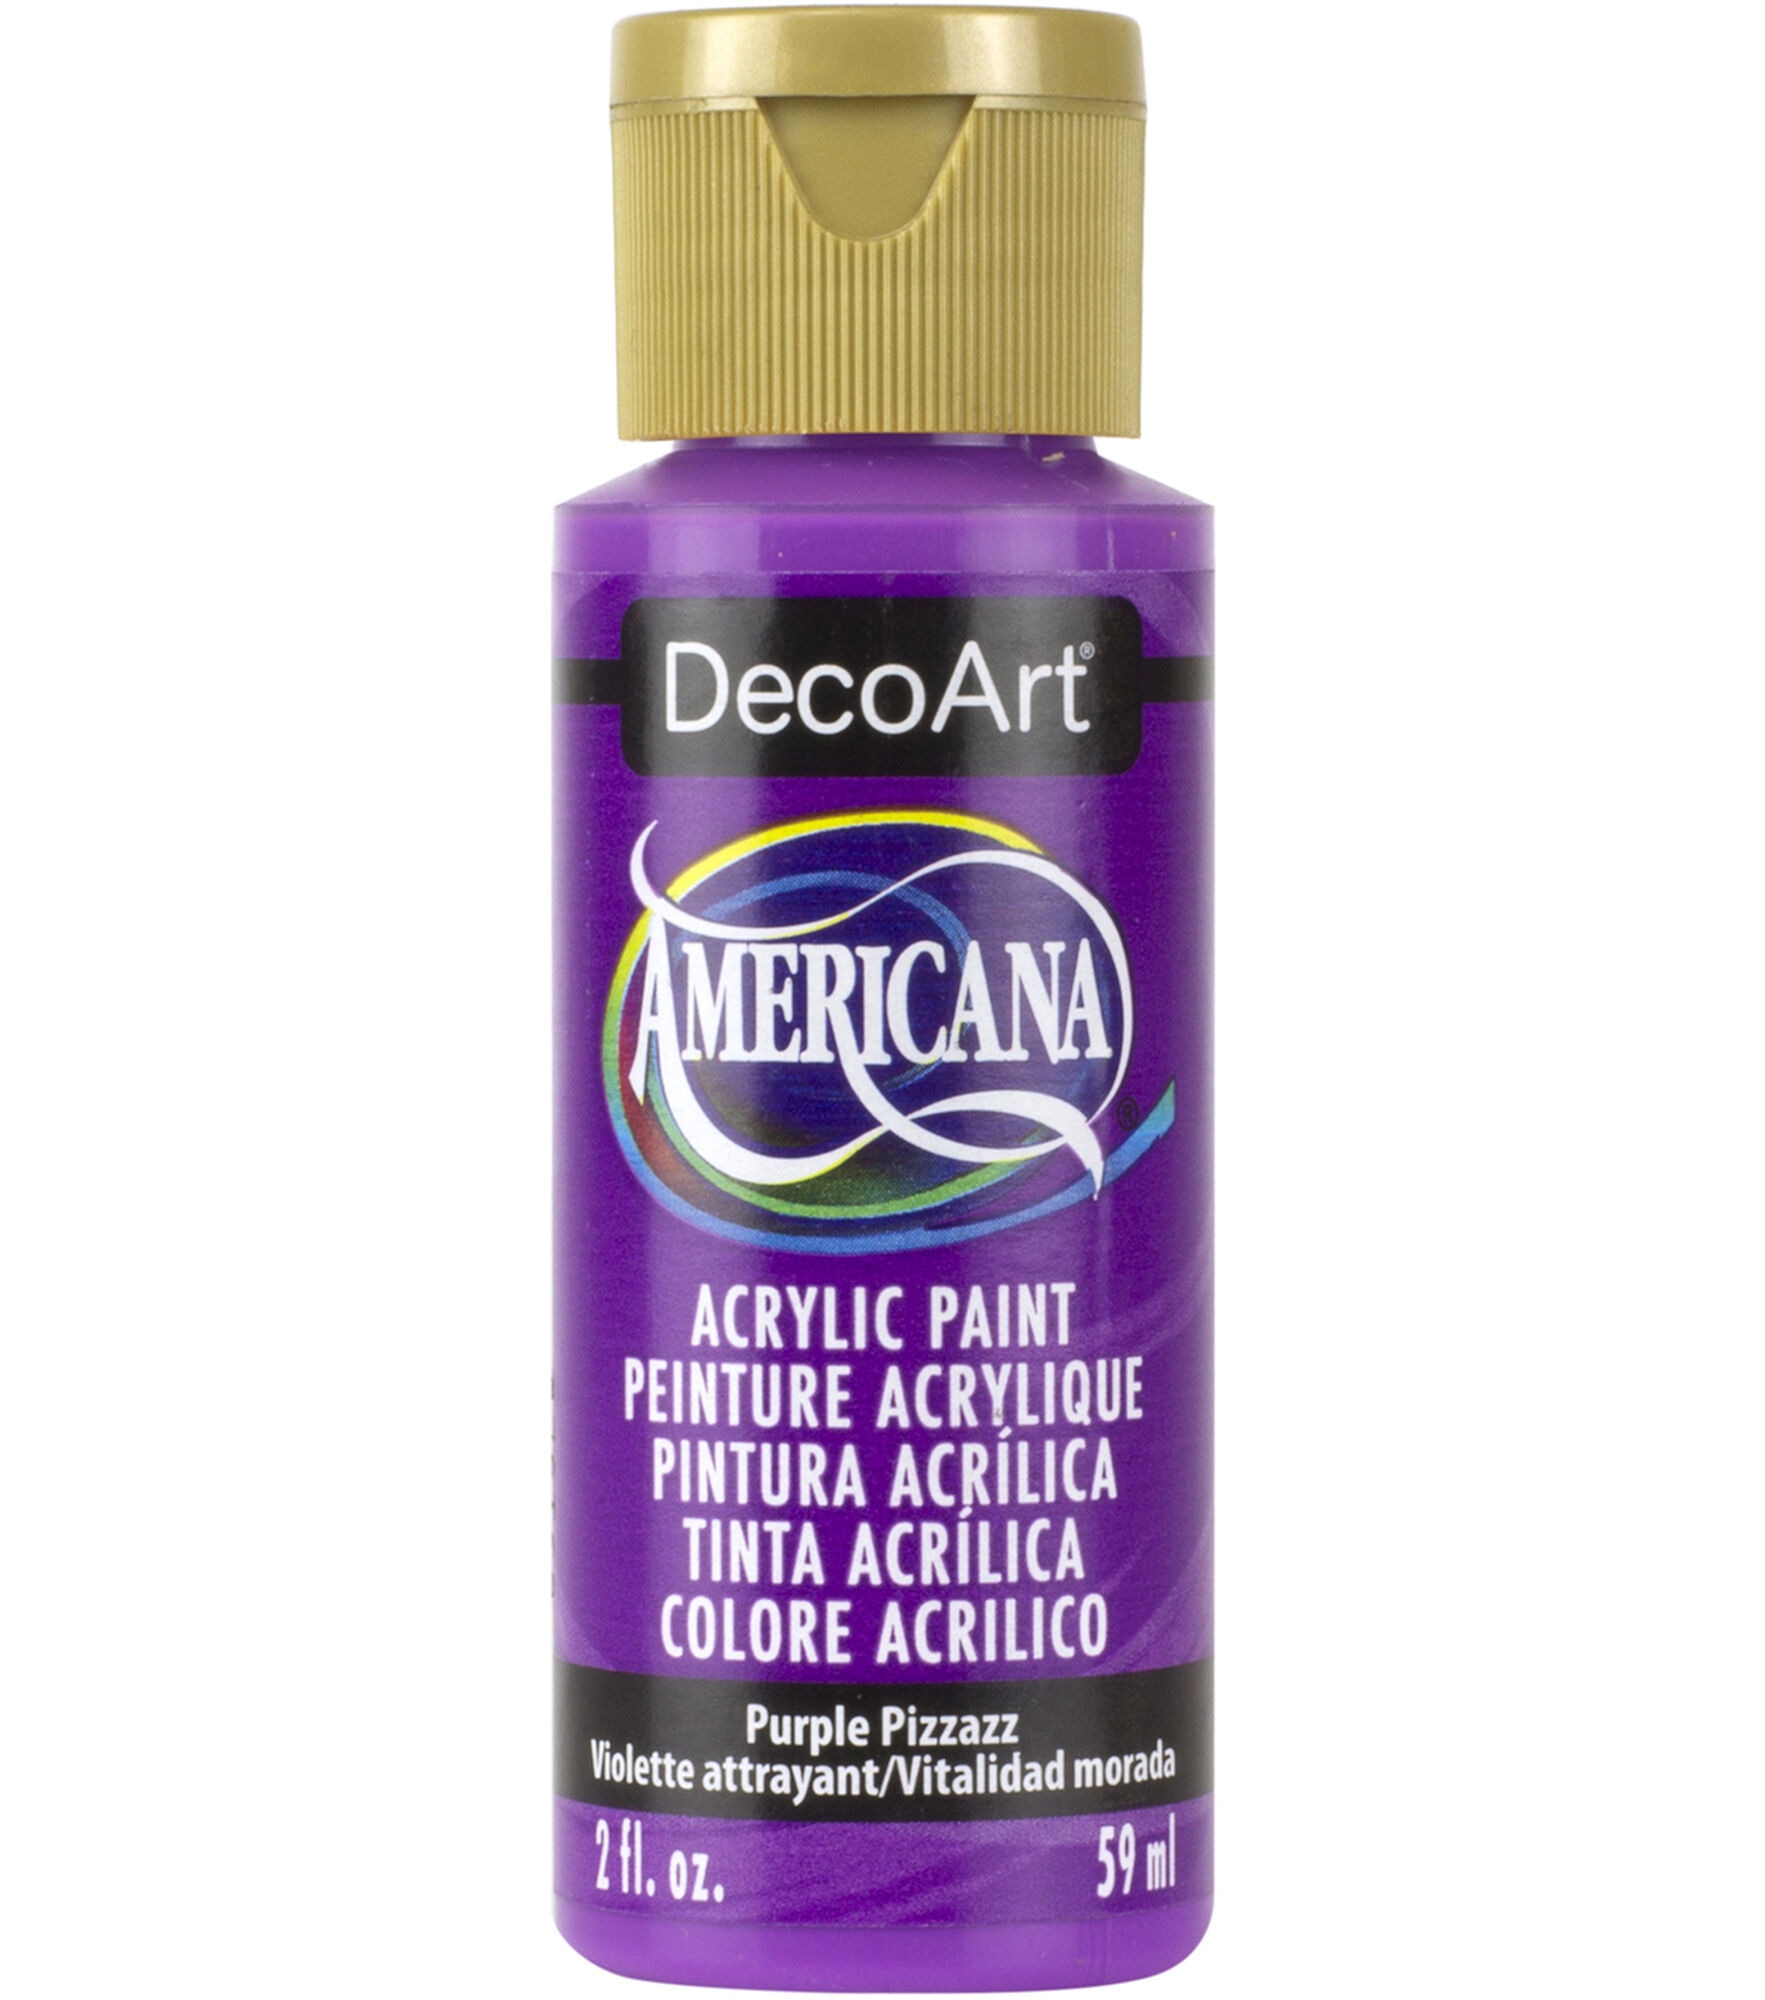 DecoArt Americana Acrylic 2oz Paint, Purple Pizzazz, hi-res